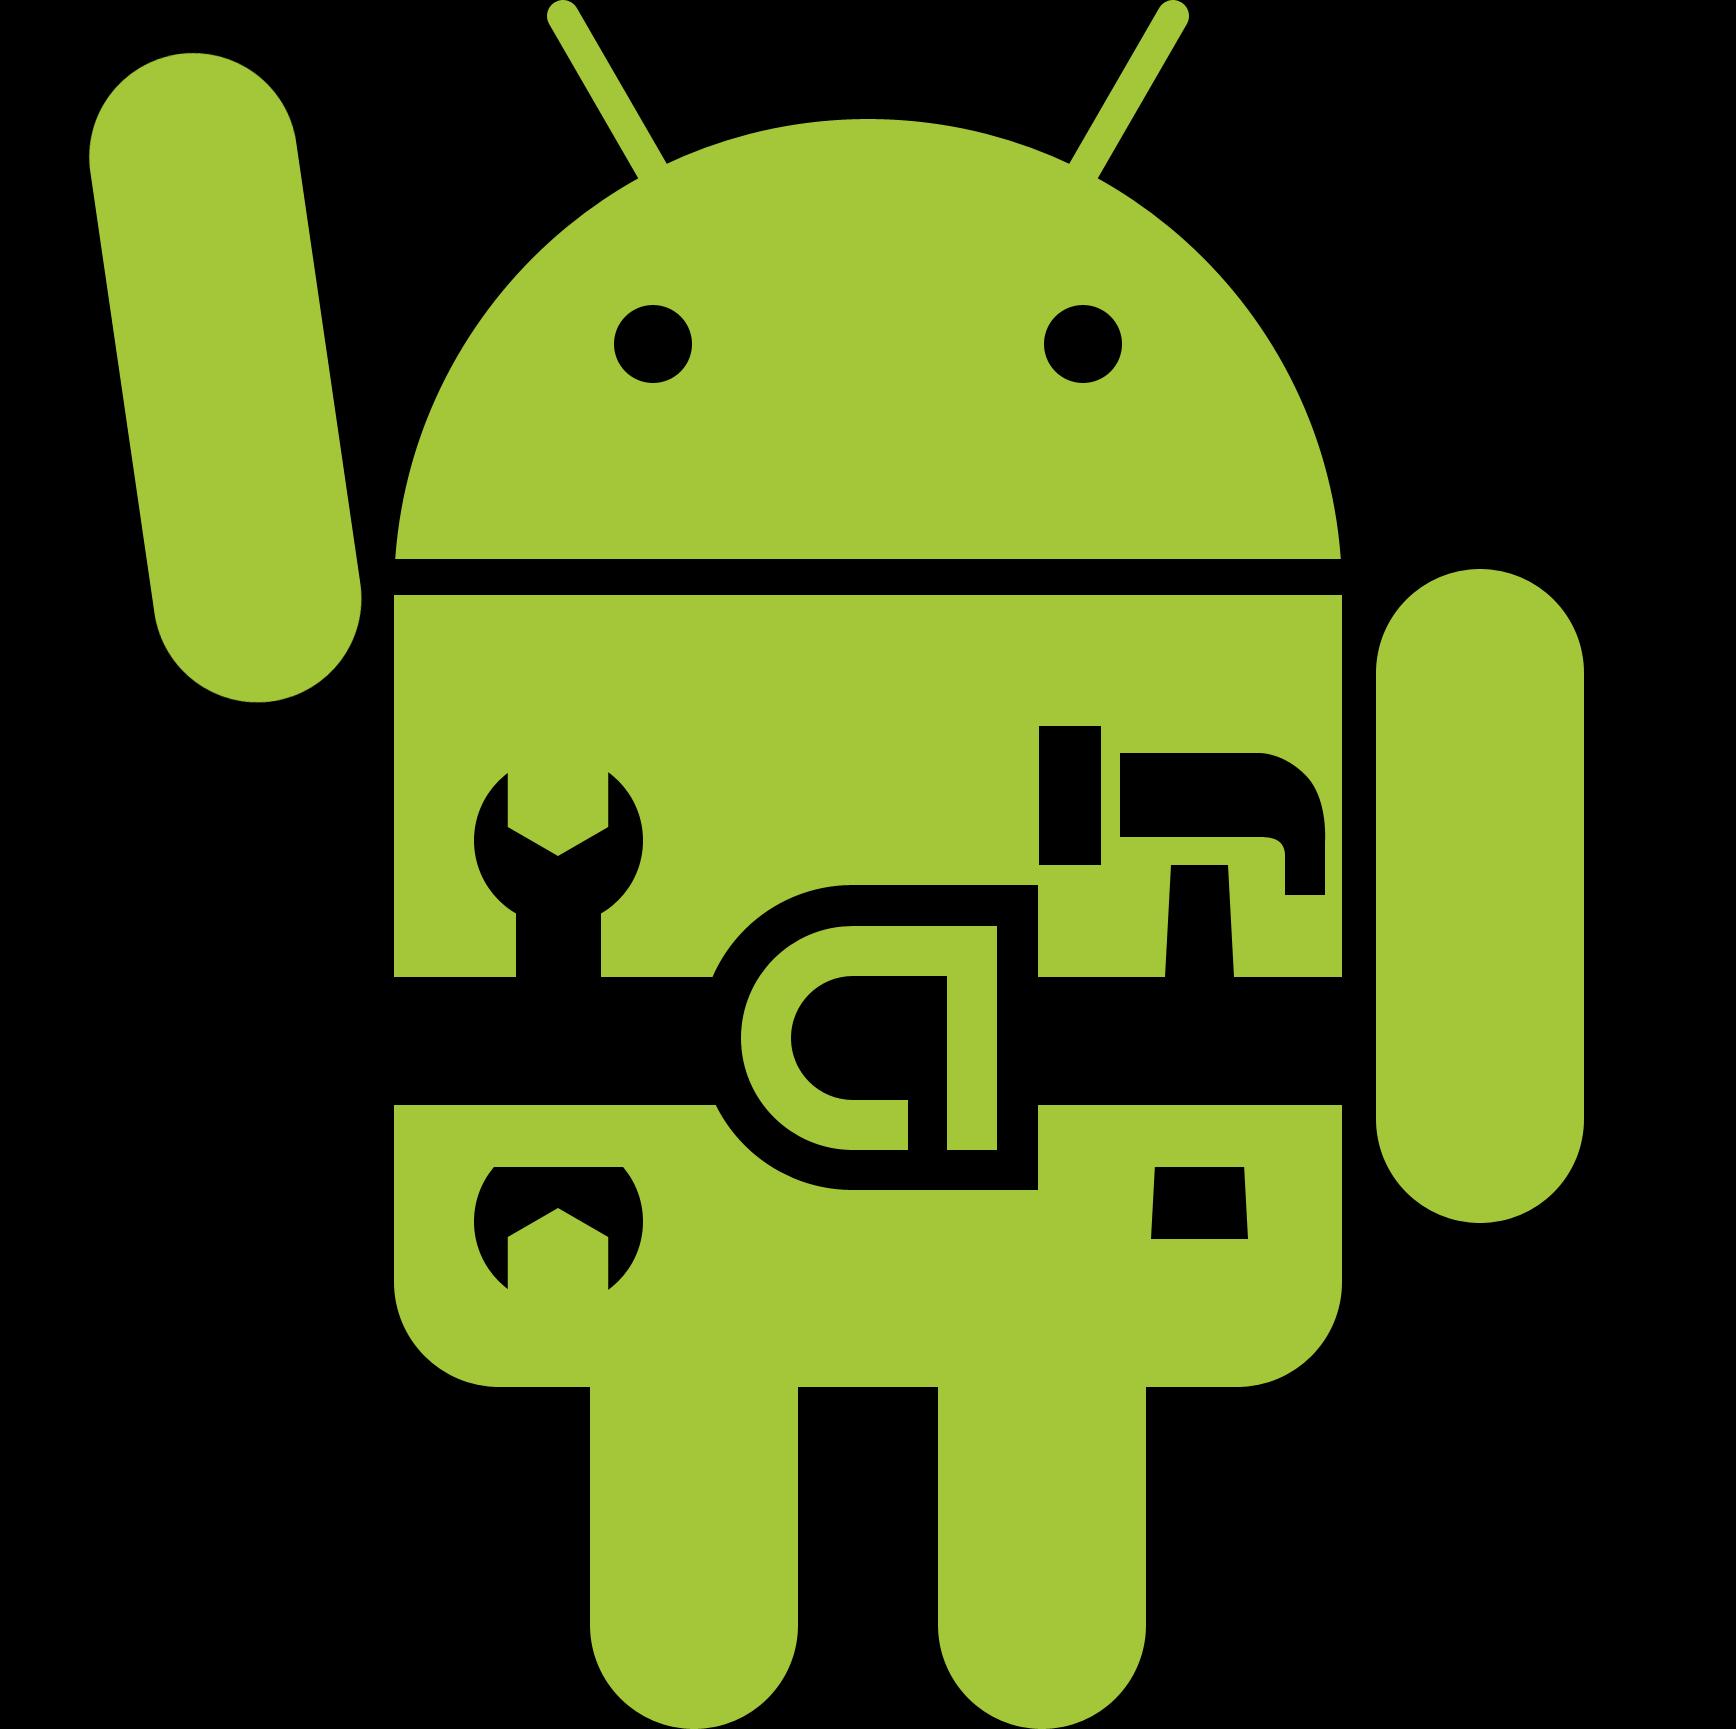 Символ андроид скопировать. Эмблема андроид. Наклейка андроид. Робот андроид зеленый. Логотип Android зеленый робот.